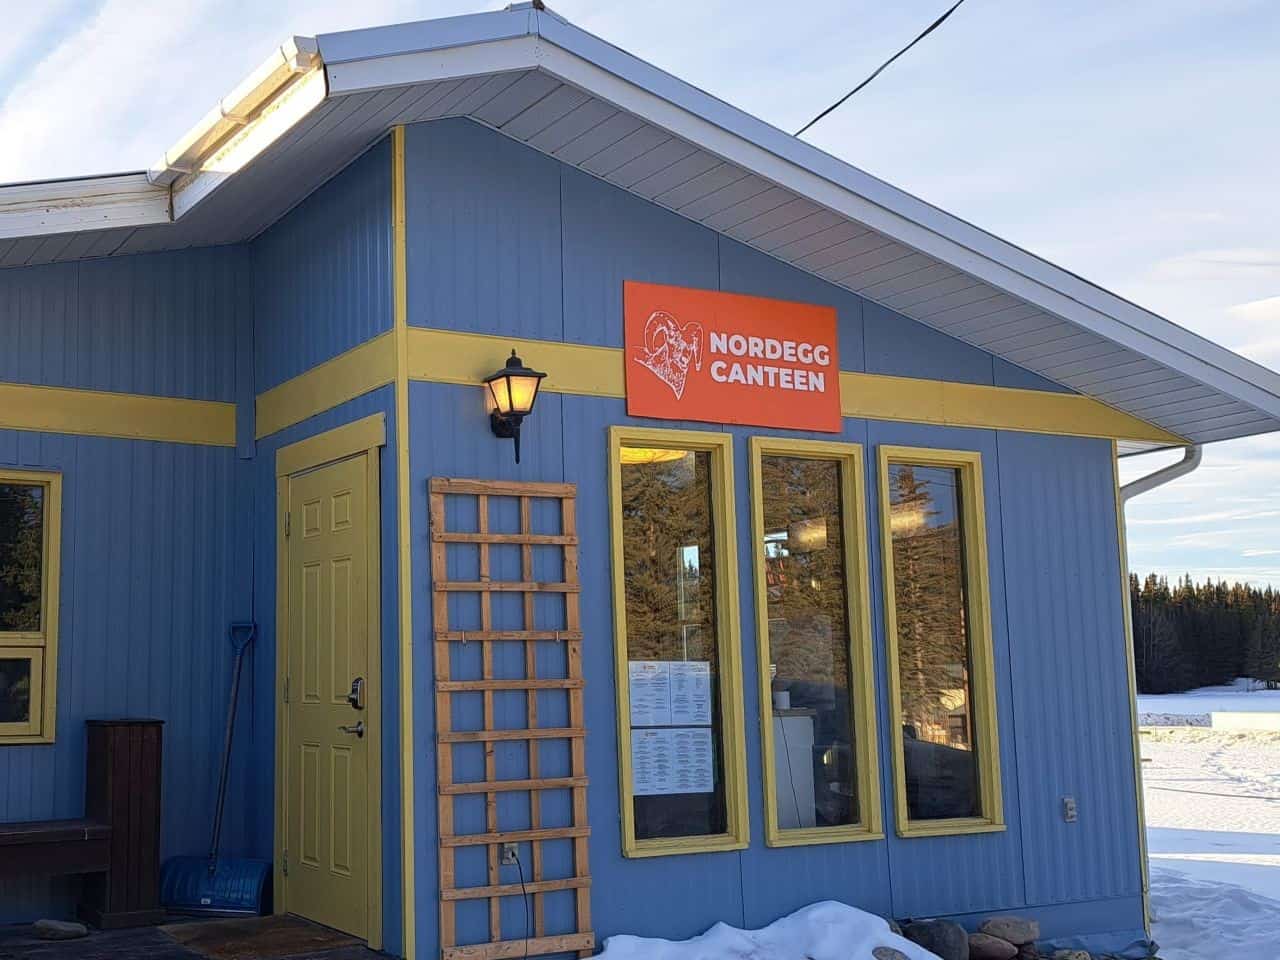 A quaint little restaurant and tour company in Nordegg Alberta